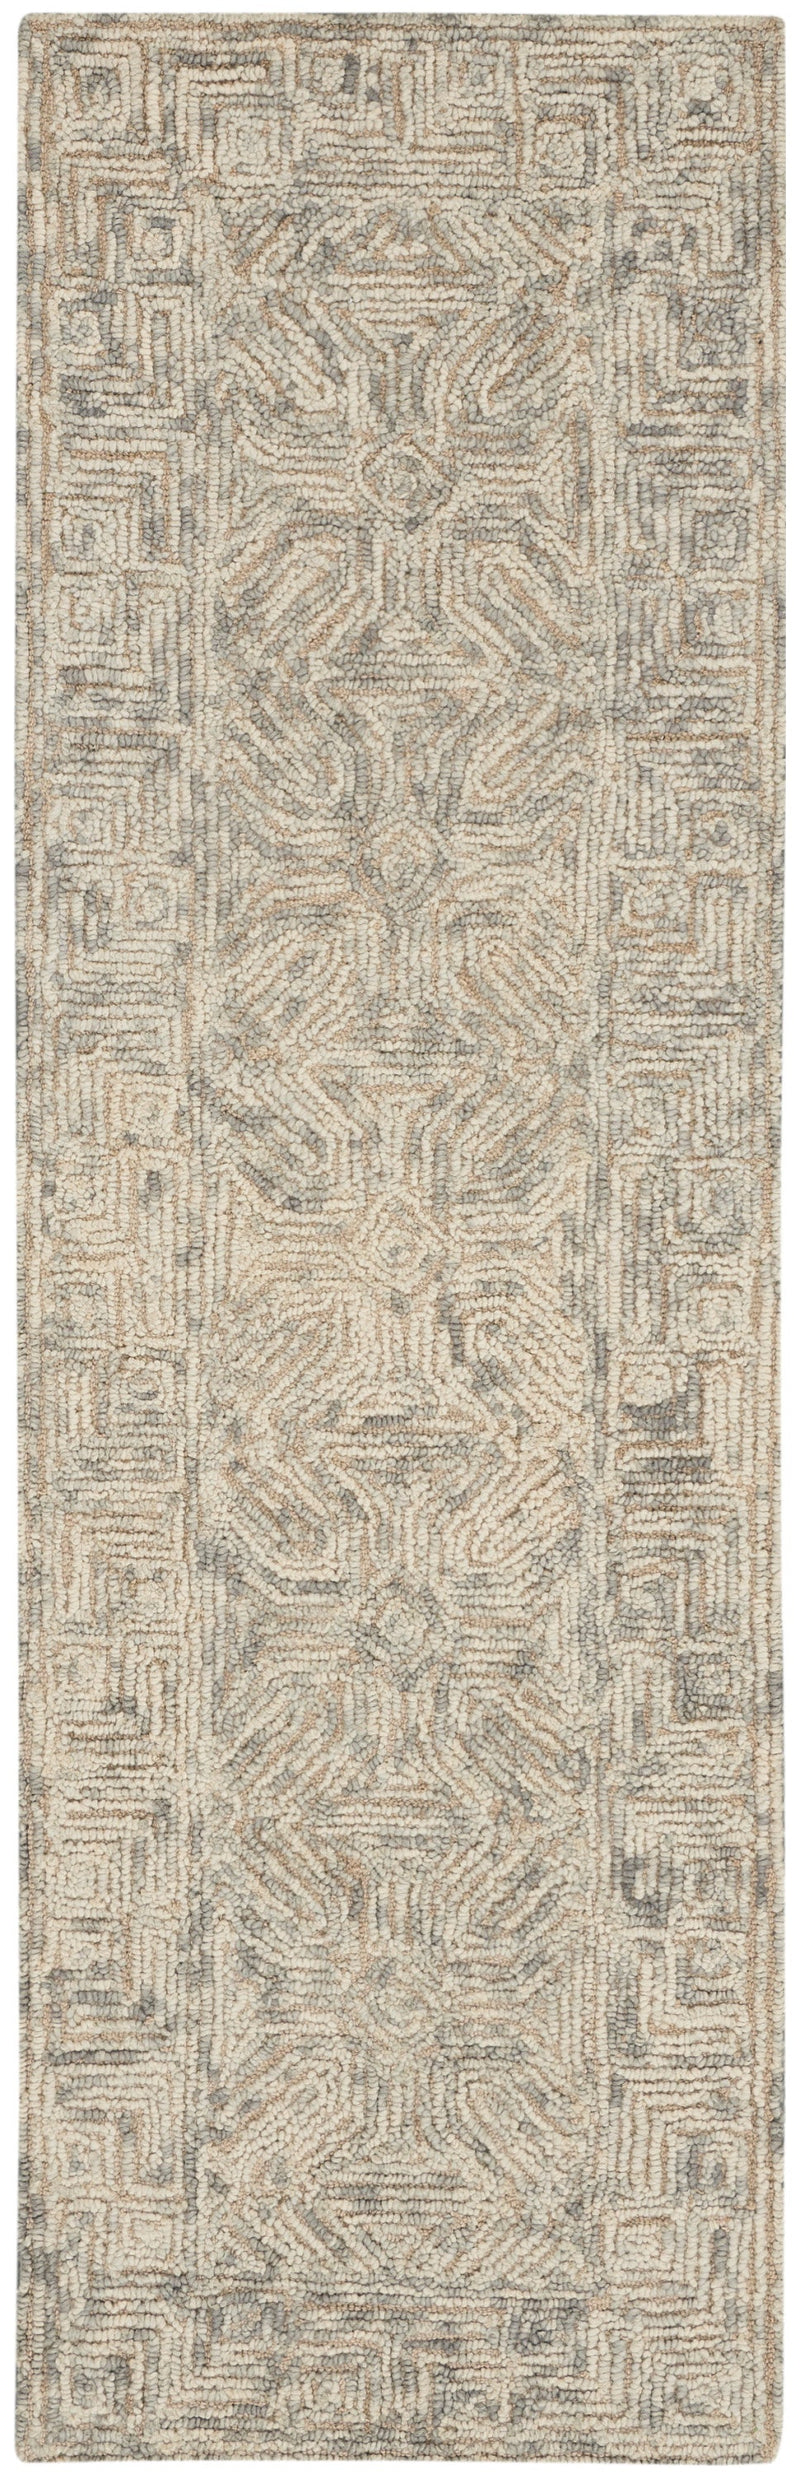 media image for colorado handmade beige grey rug by nourison 99446790316 redo 2 239